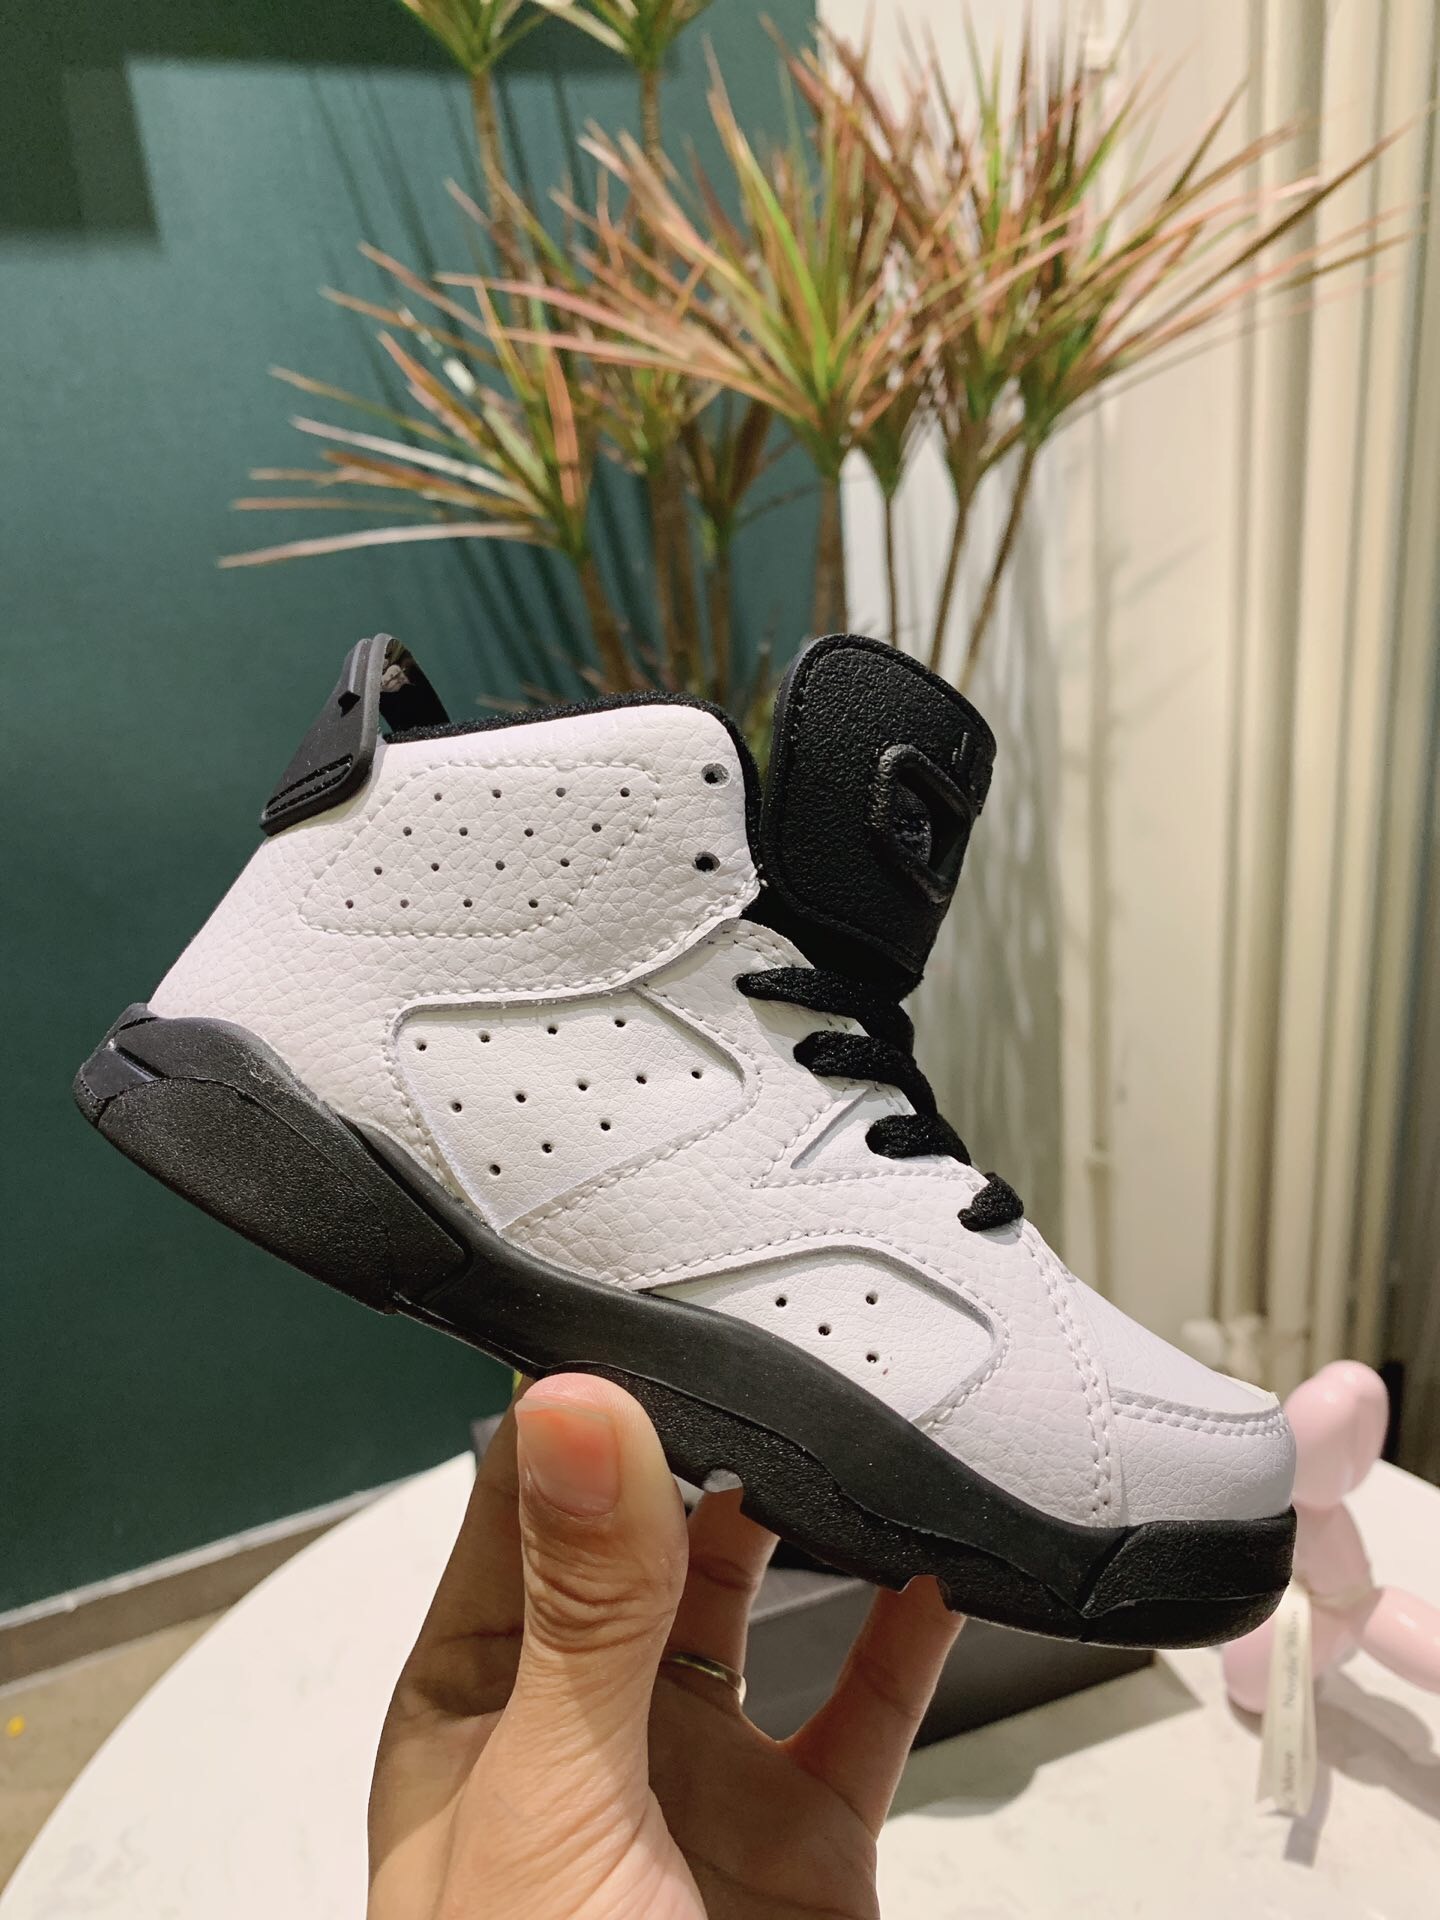 2019 Kids Air Jordan 6 White Black Shoes